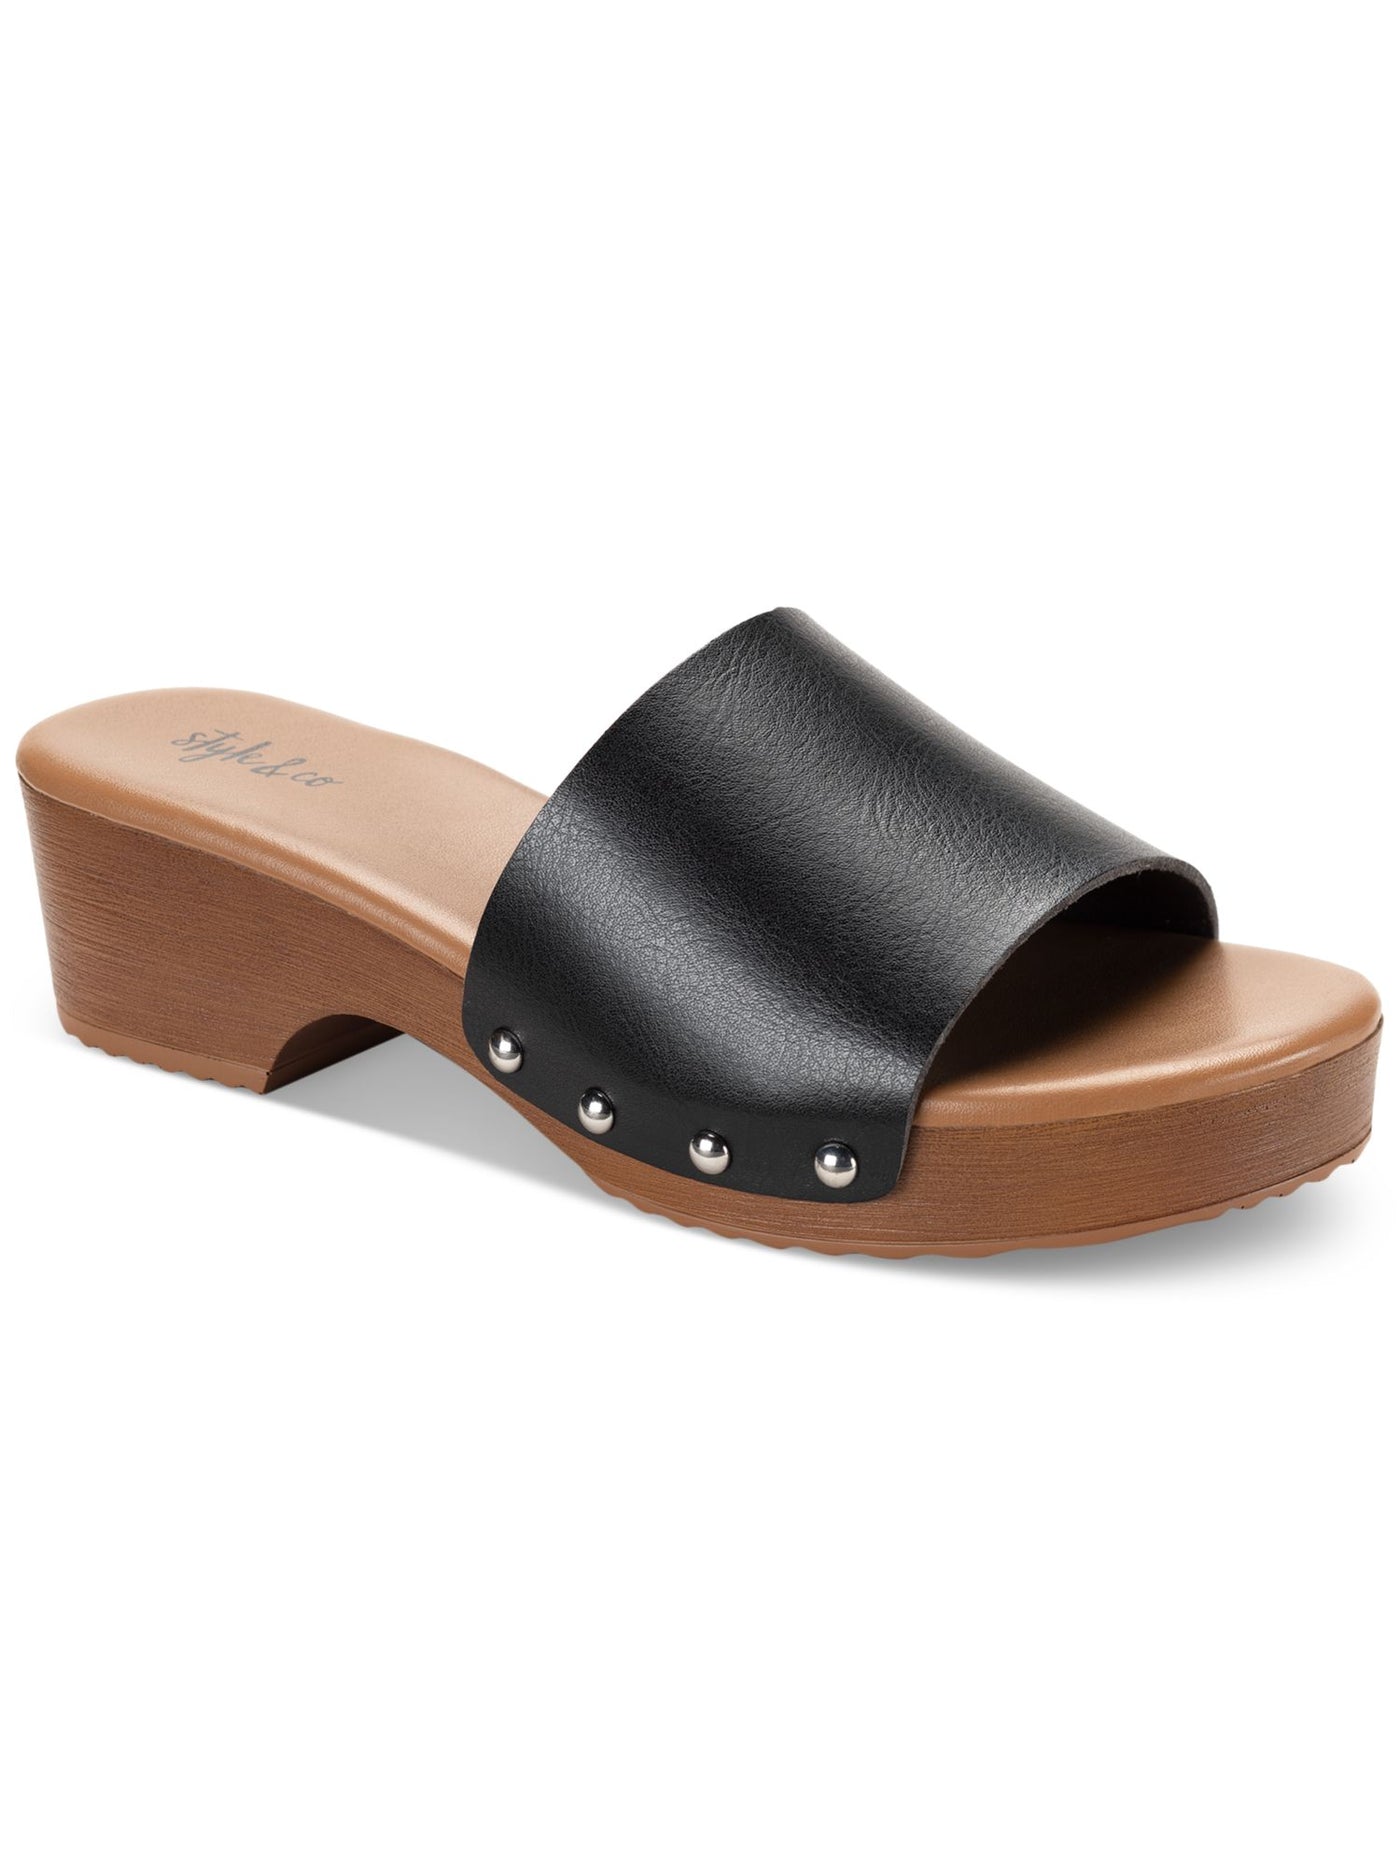 STYLE & COMPANY Womens Black 1" Platform Studded Padded Deviee Round Toe Block Heel Slip On Slide Sandals Shoes 8 M